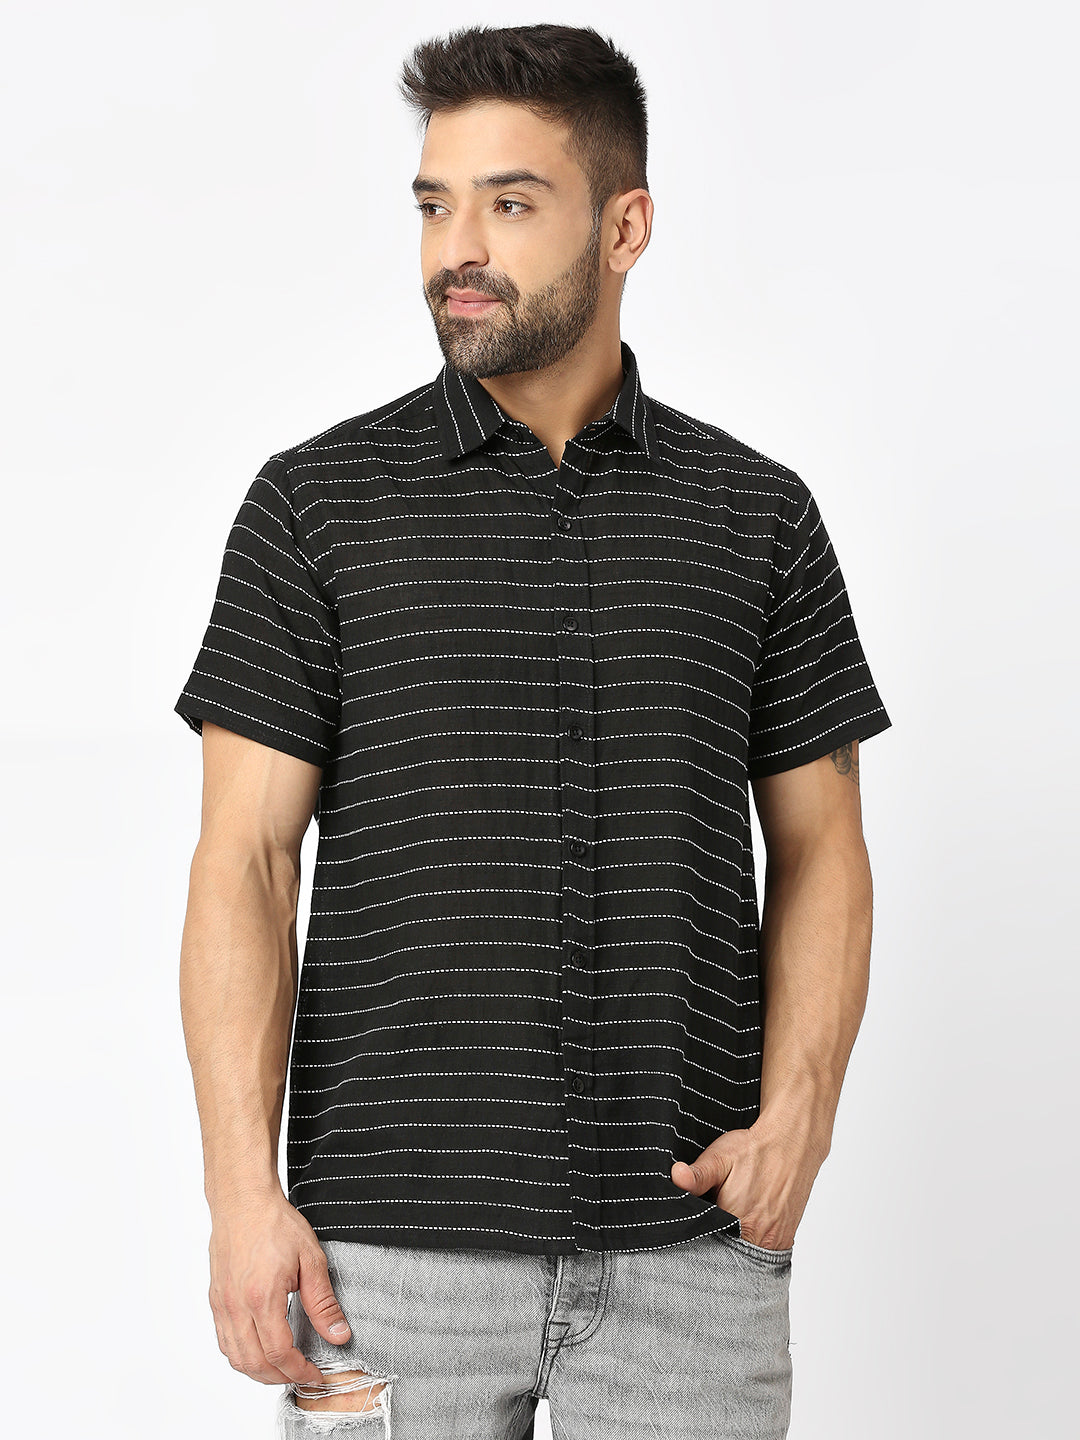 BLAMBLACK Men's Embroidered Half Sleeves Regular fit Spread Collar Shirt